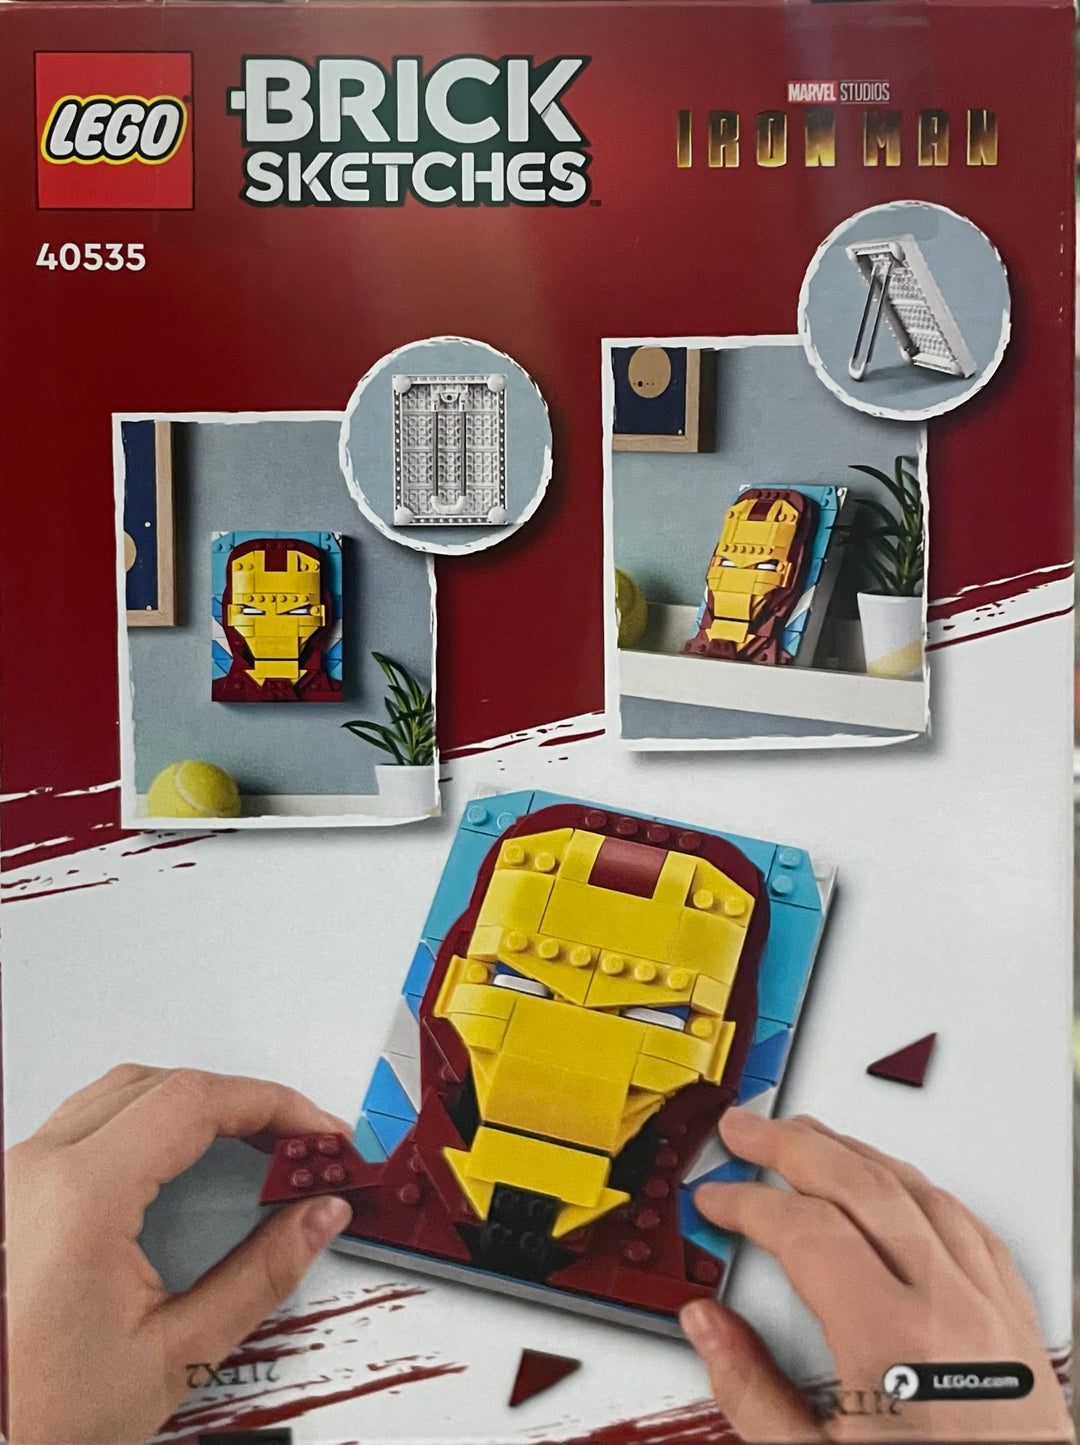 Iron Man, 40535